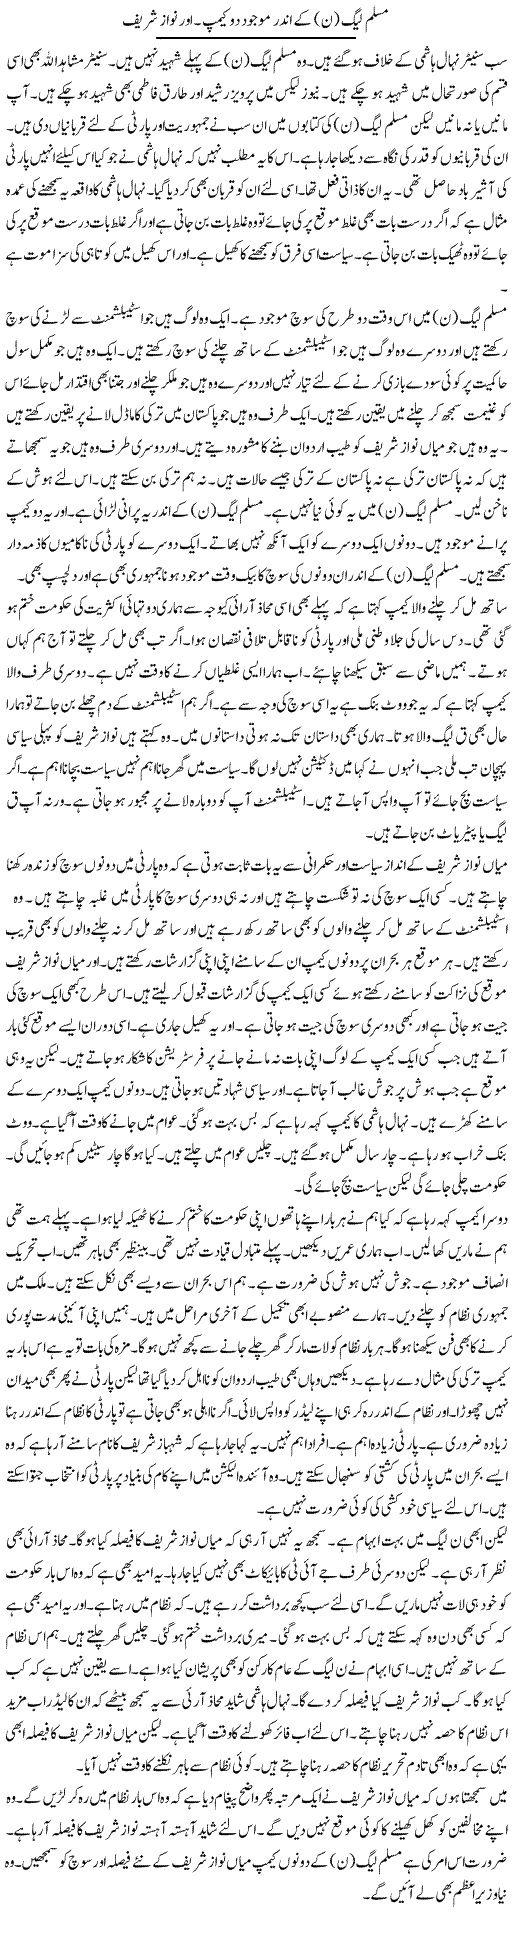 Muslim League Noon Ke Andar Mojood Do Camp Aur Nawaz Shareef | Muzamal Suharwardy | Daily Urdu Columns